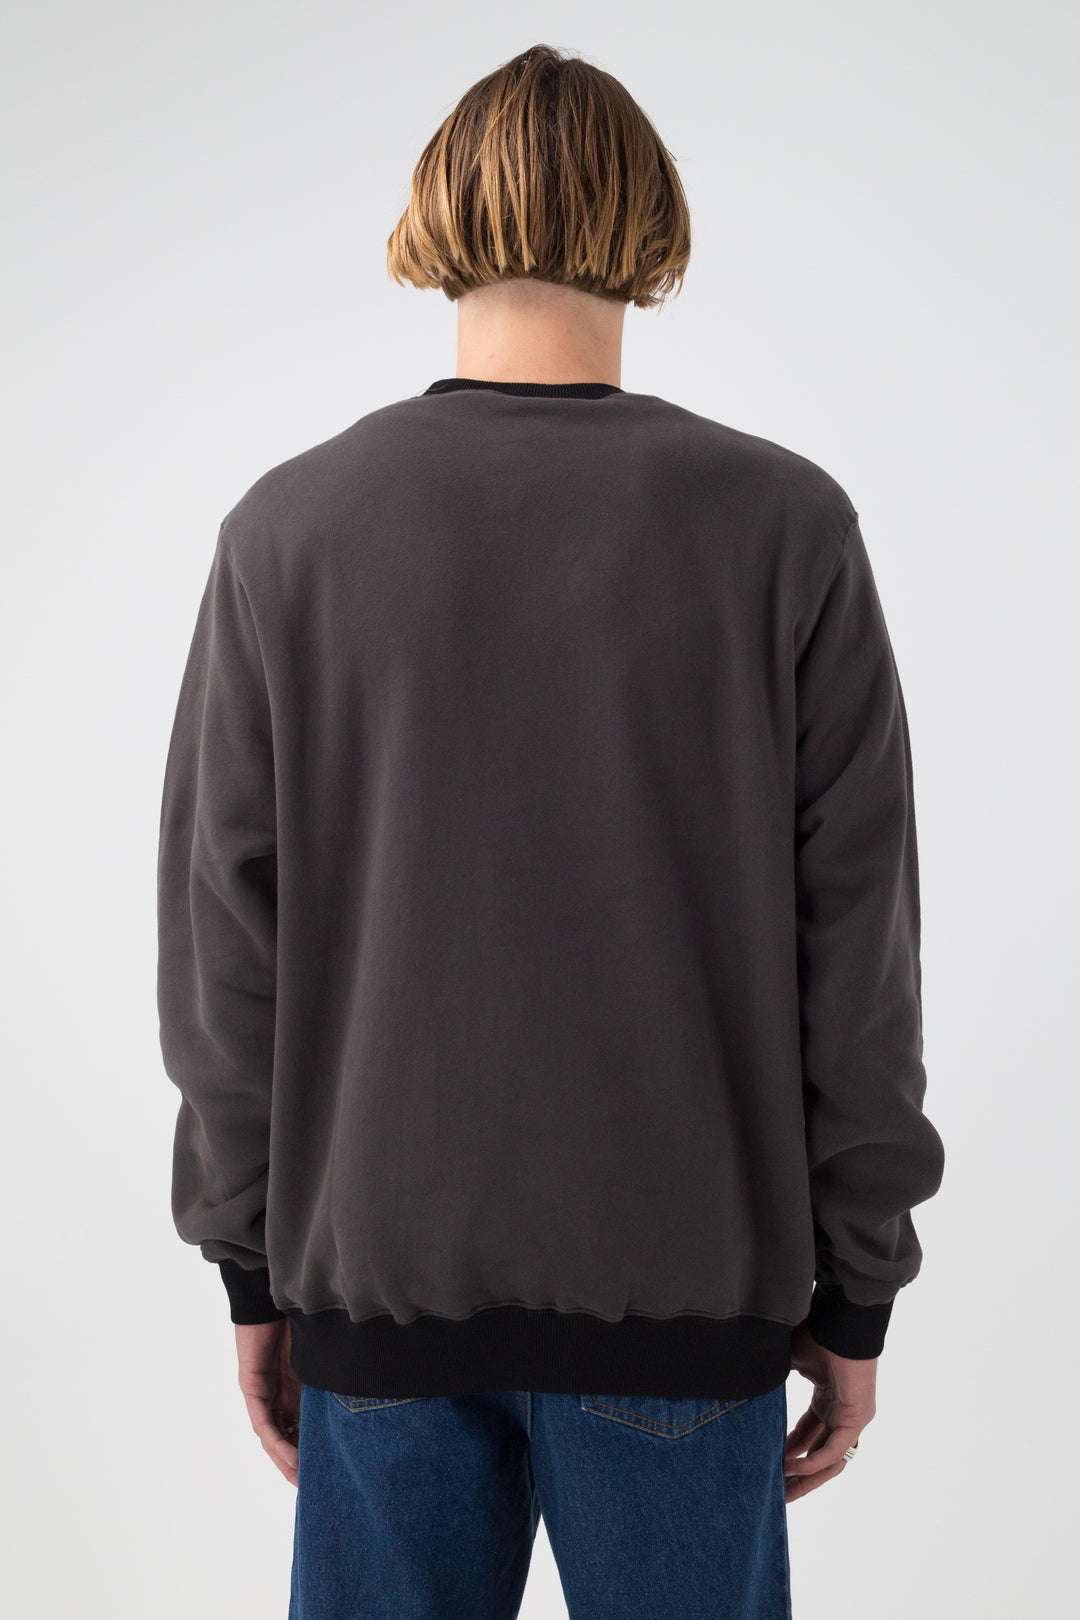 Pass~Port Organic Tonal Sweater